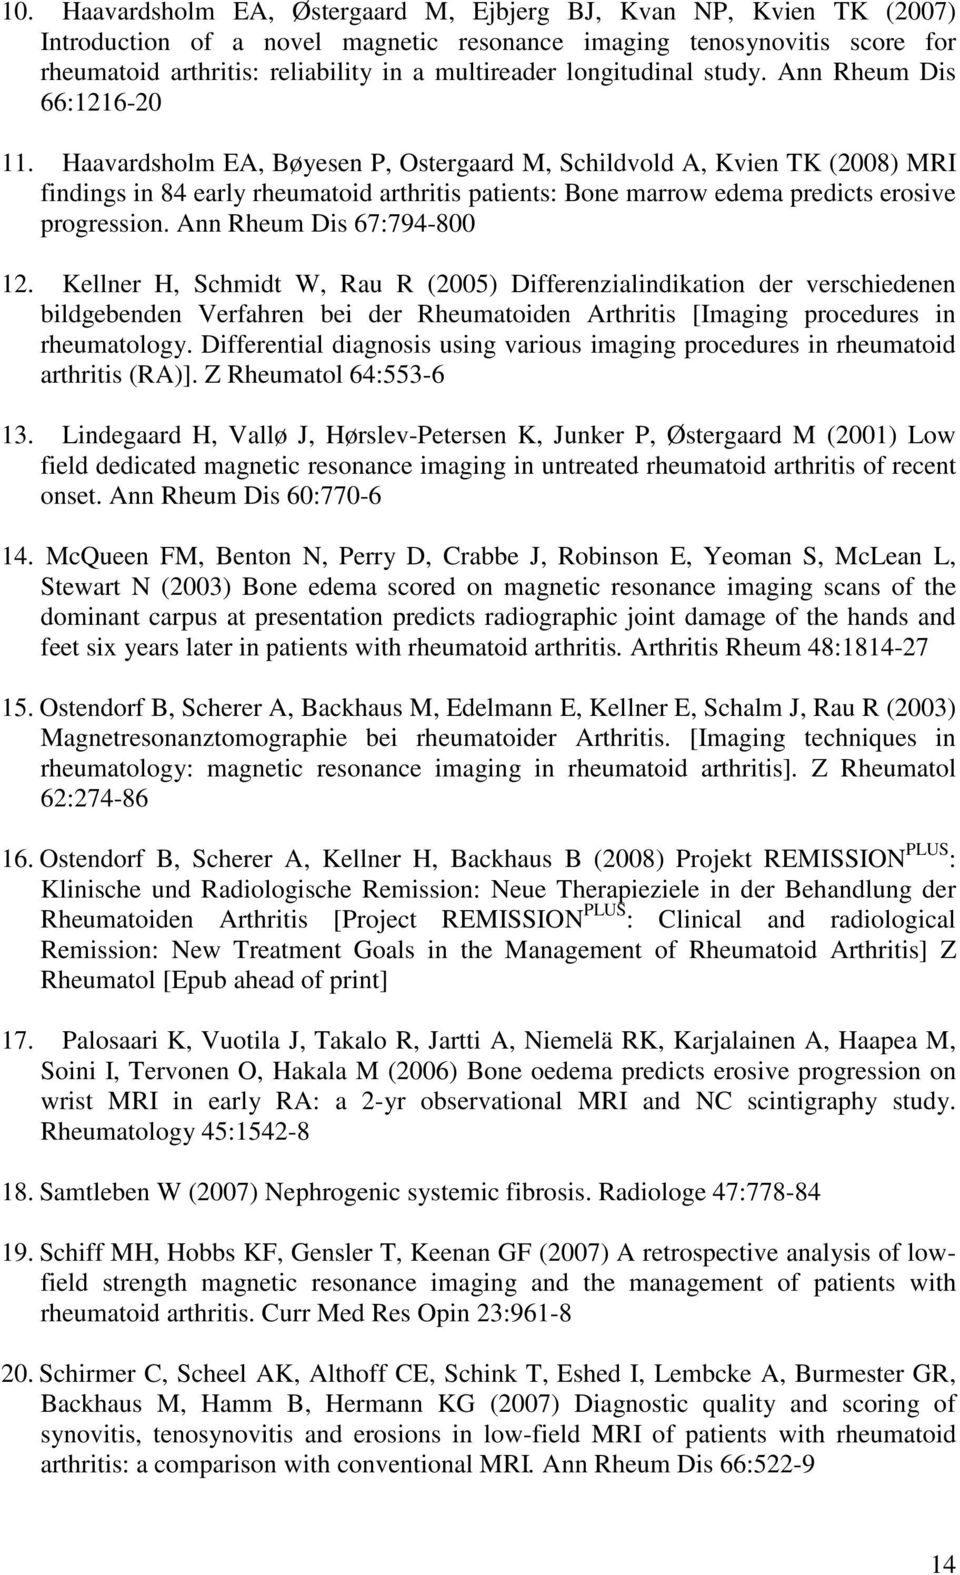 Haavardsholm EA, Bøyesen P, Ostergaard M, Schildvold A, Kvien TK (2008) MRI findings in 84 early rheumatoid arthritis patients: Bone marrow edema predicts erosive progression.